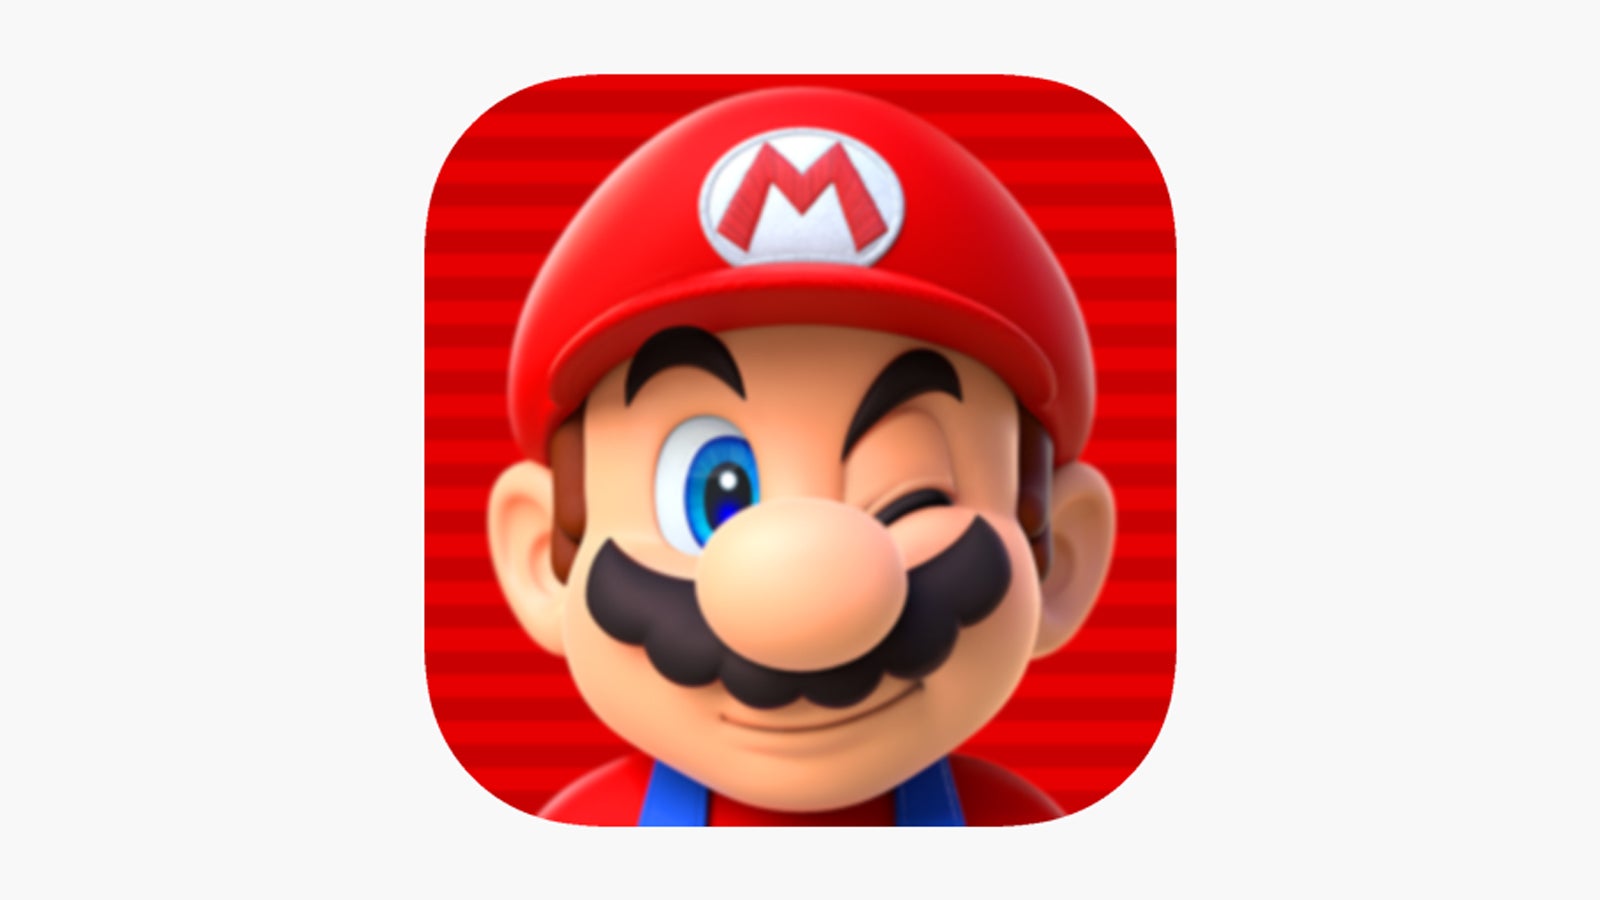 Super Mario Run's app icon.